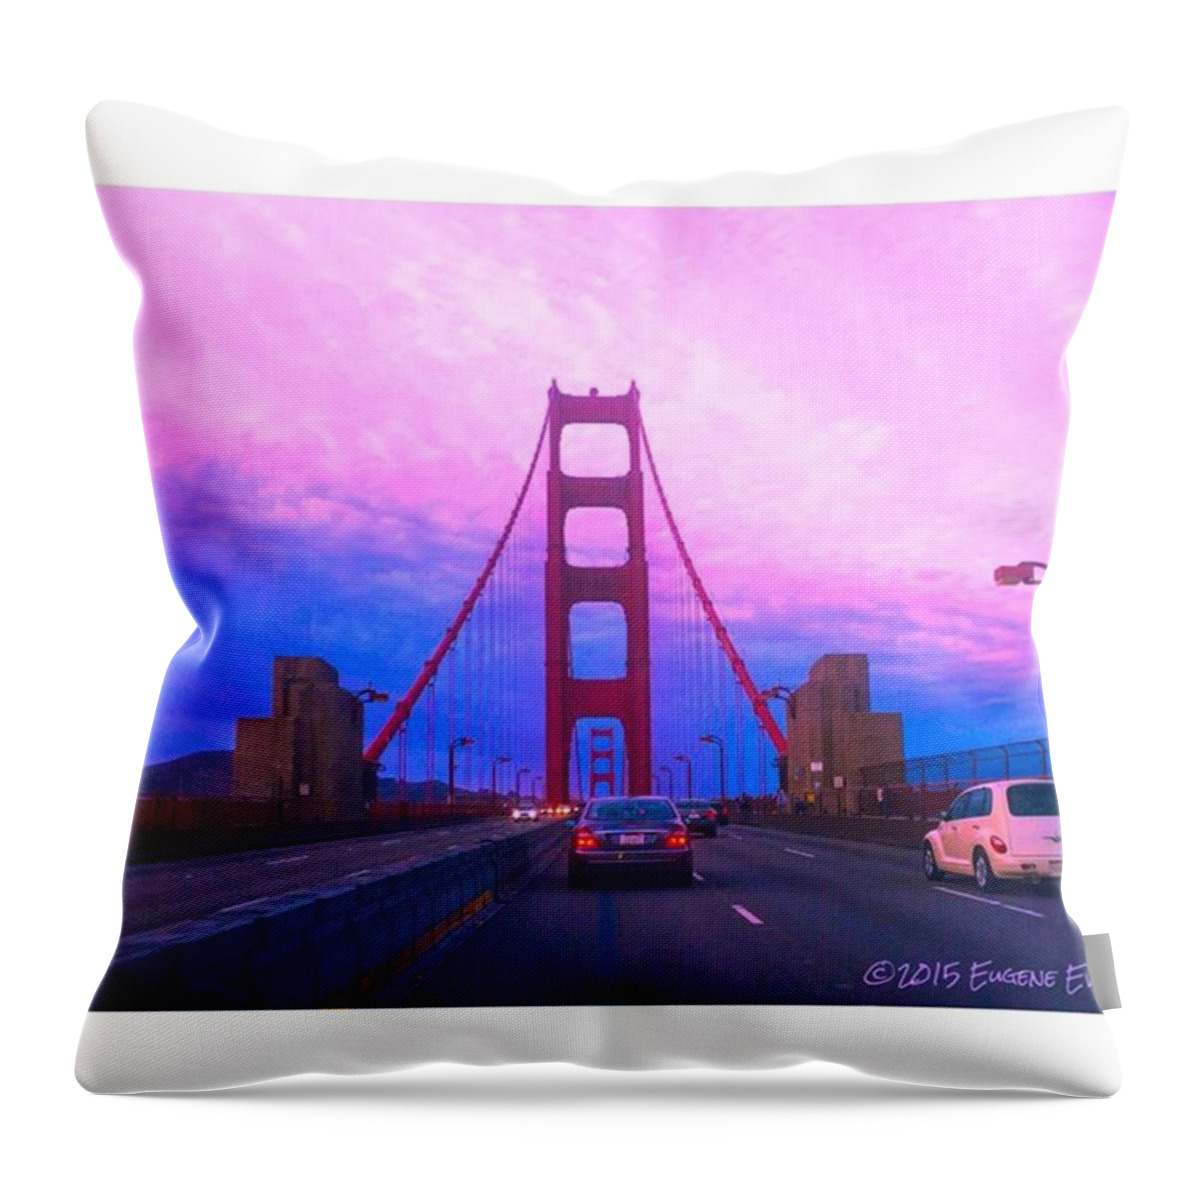 Golden Gate Bridge Throw Pillow featuring the photograph Purple Sky Over The Golden Gate Bridge by Eugene Evon